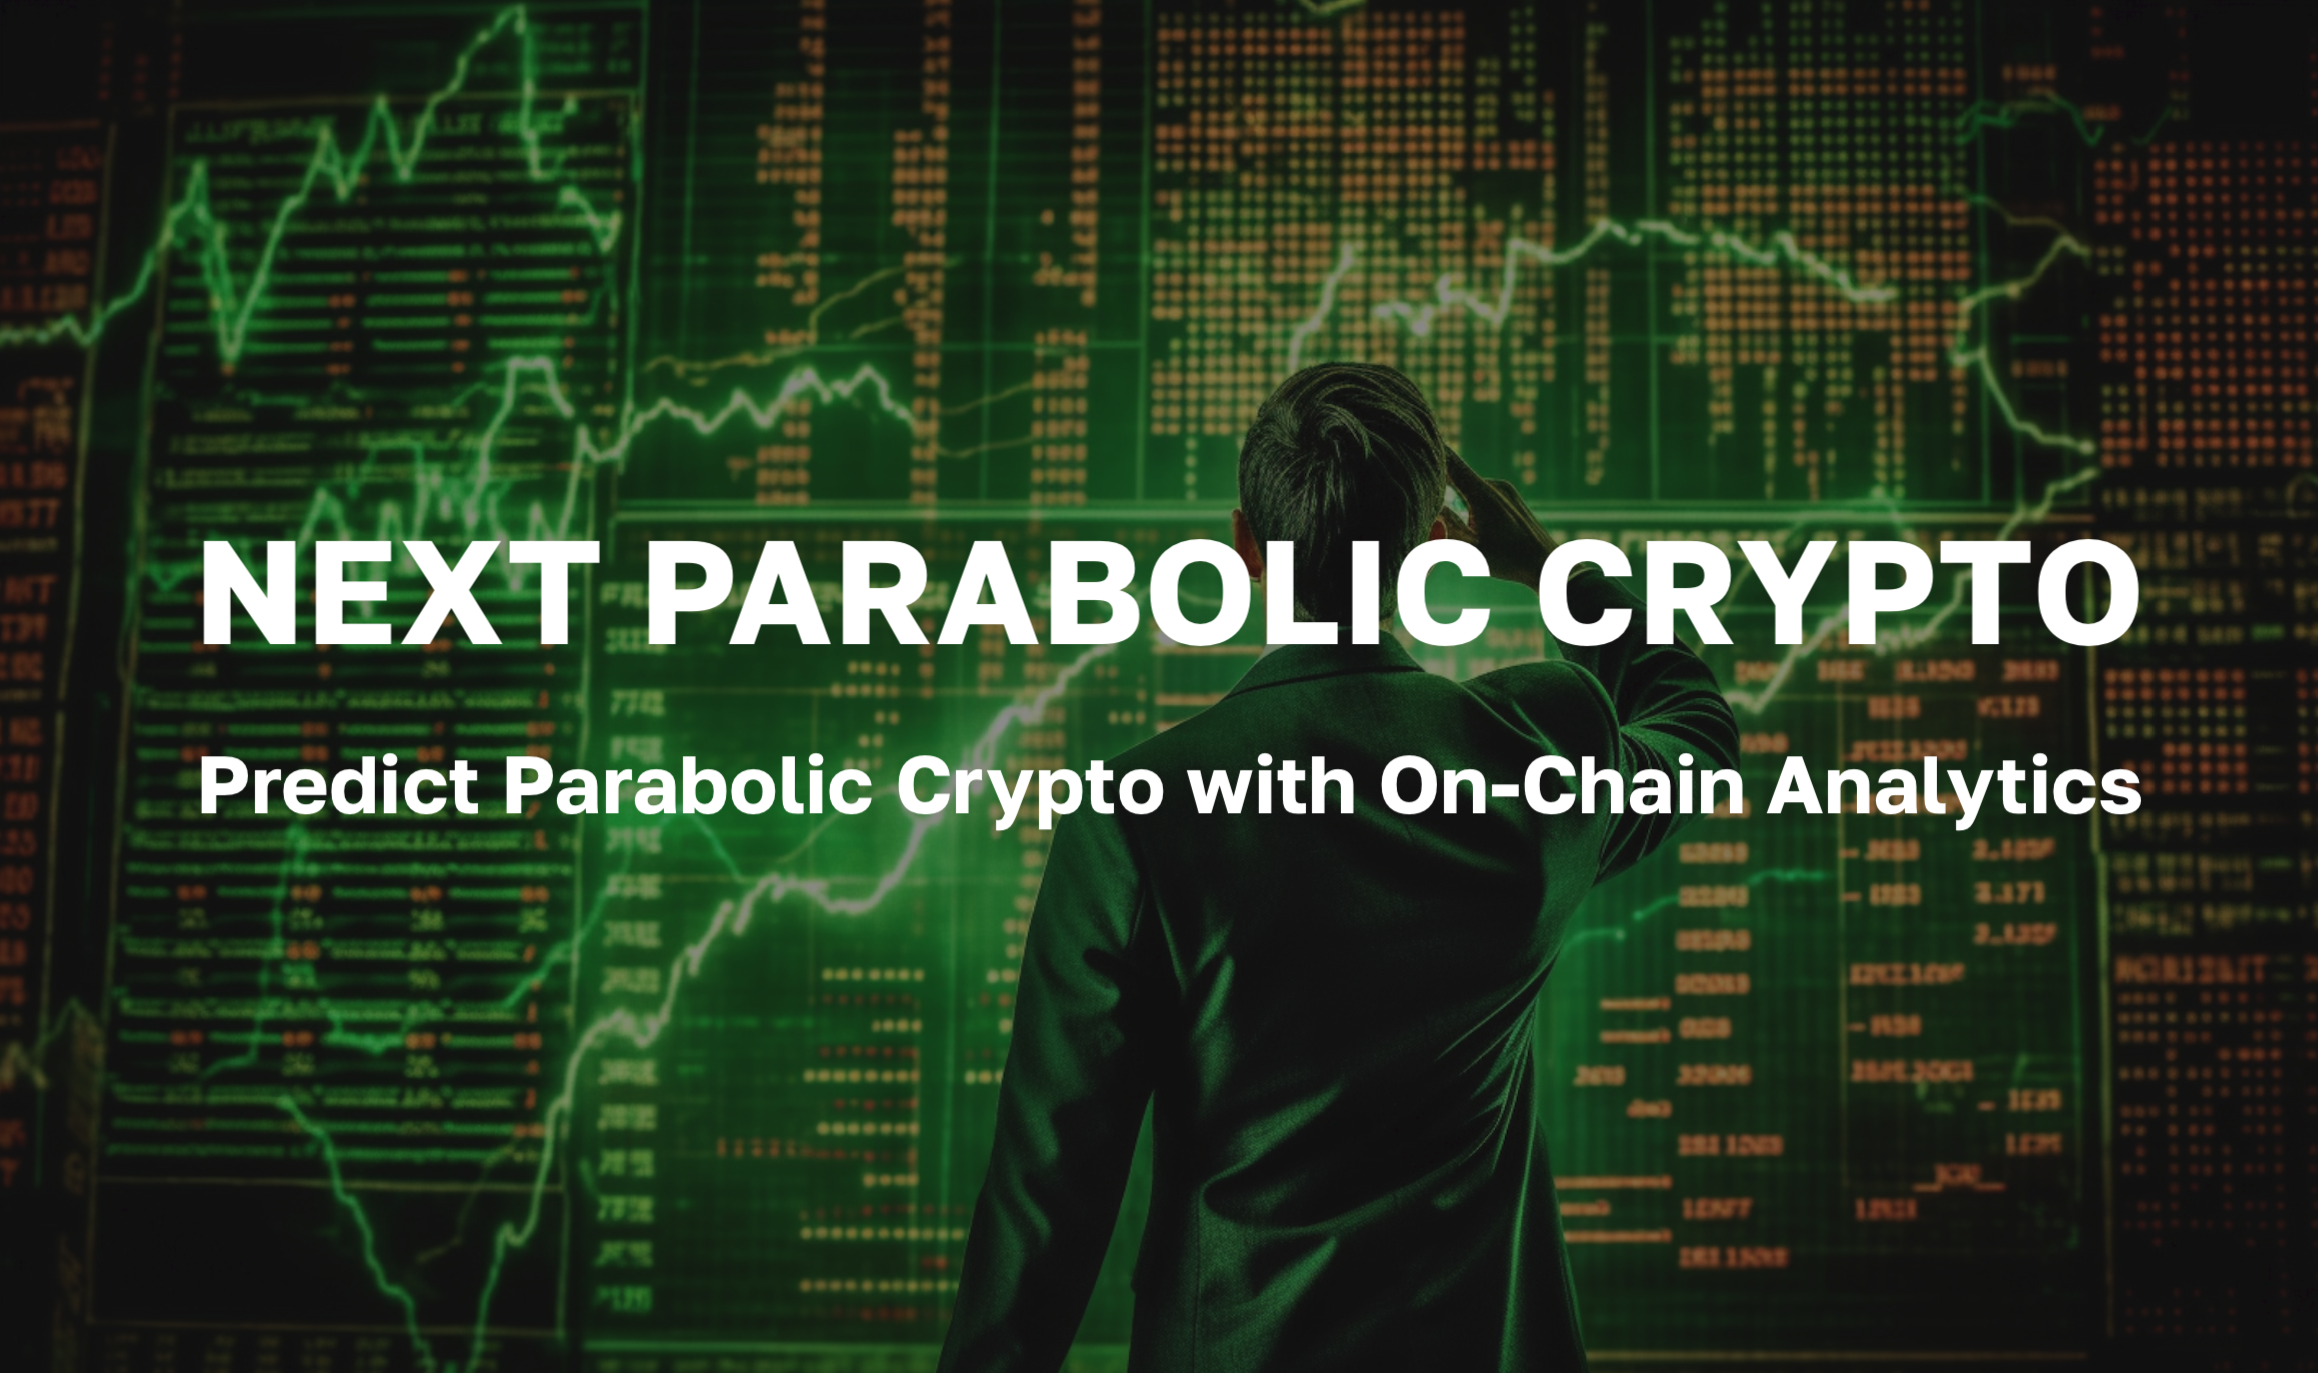 Predict the Next Parabolic Crypto with On-Chain Analytics